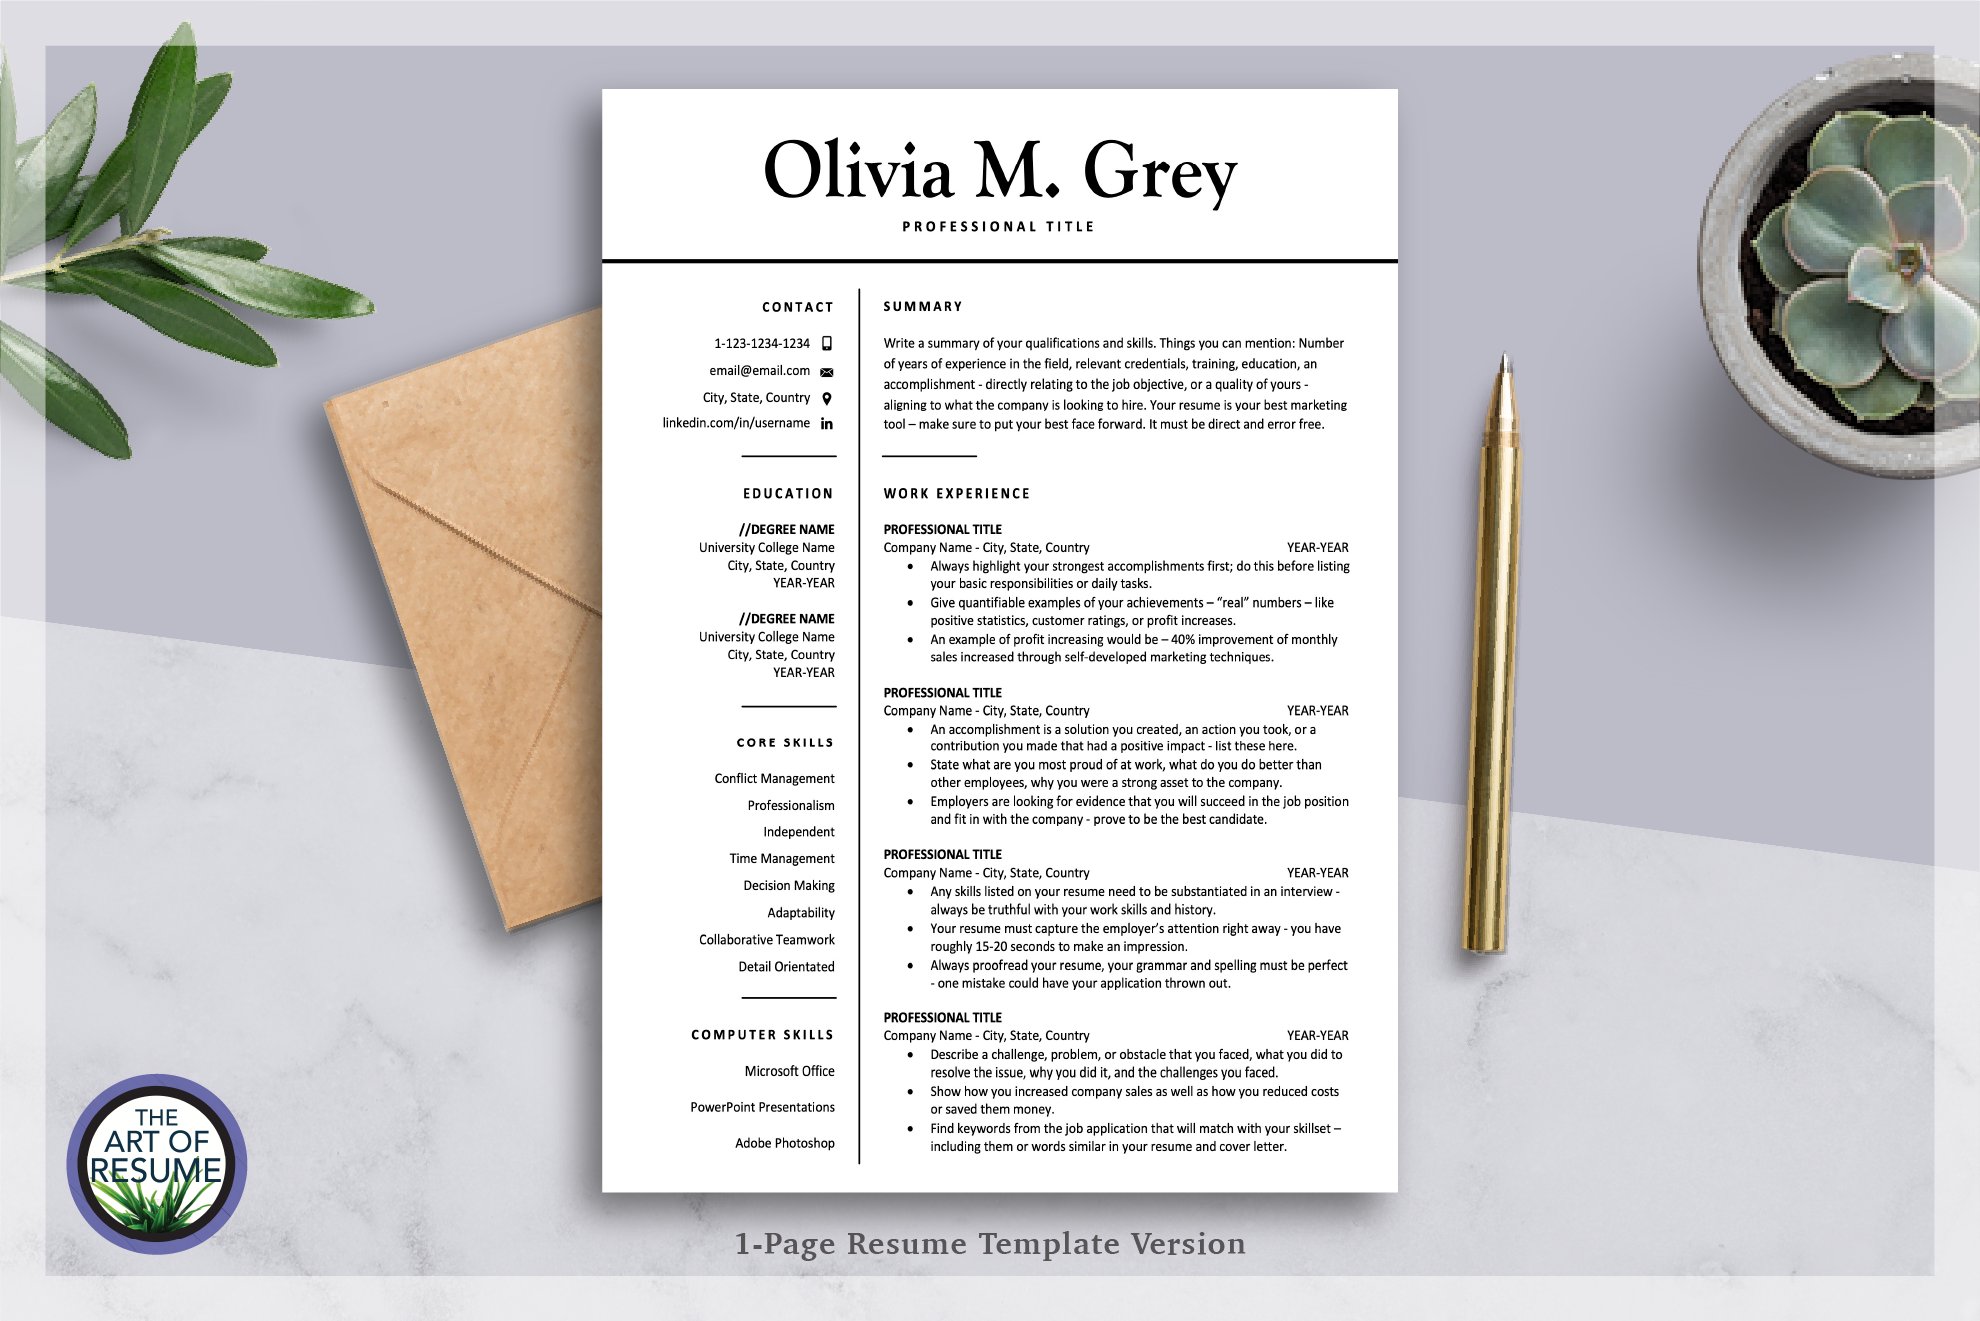 Minimalist Resume CV Template Design preview image.